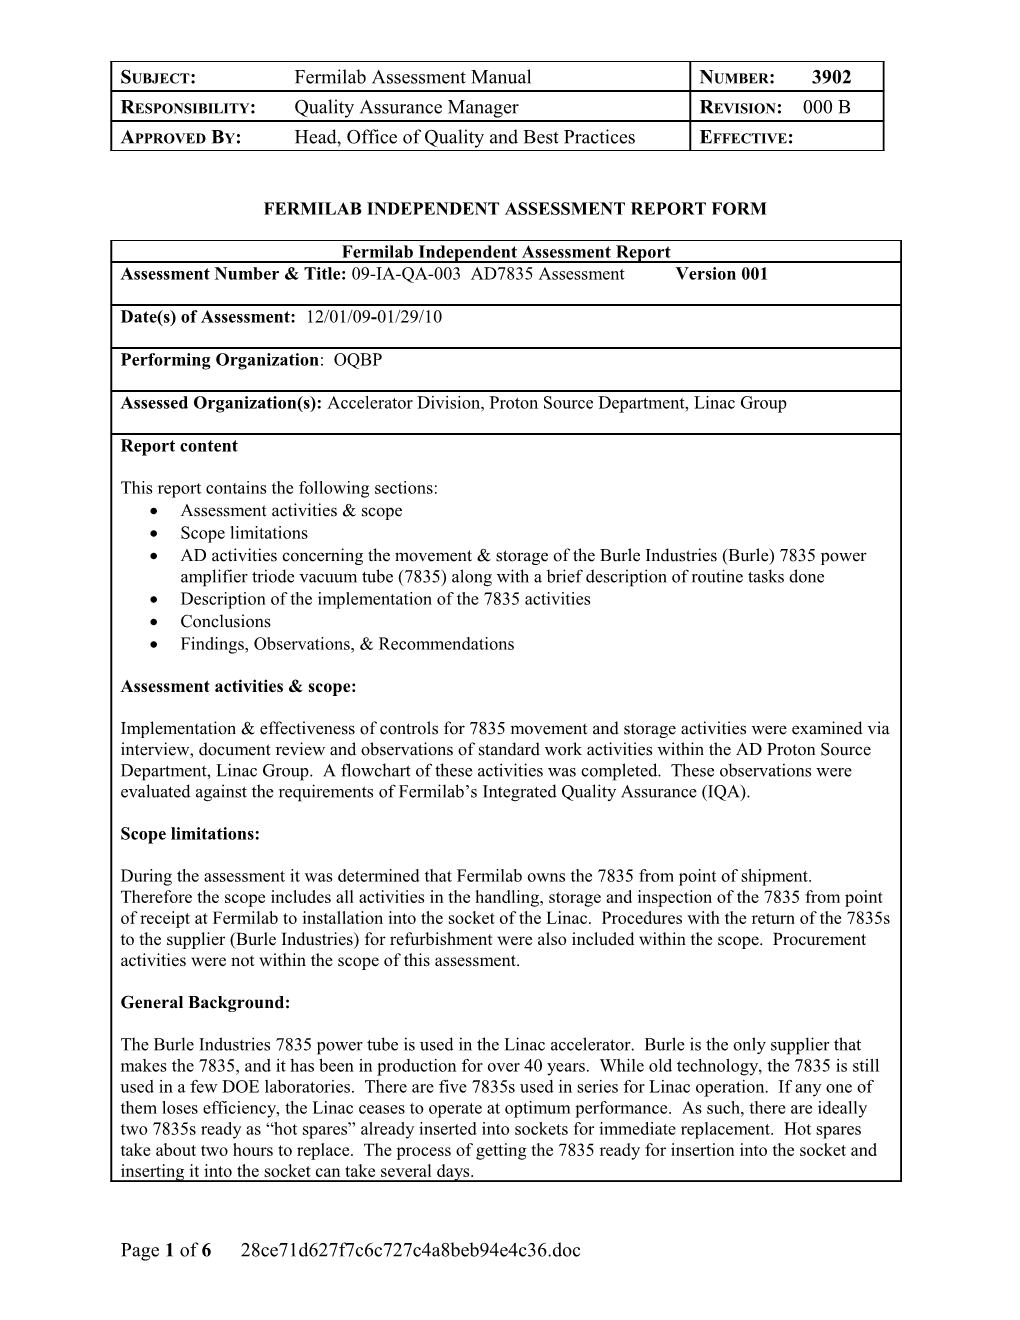 Fermilab Independent Assessment Report Form